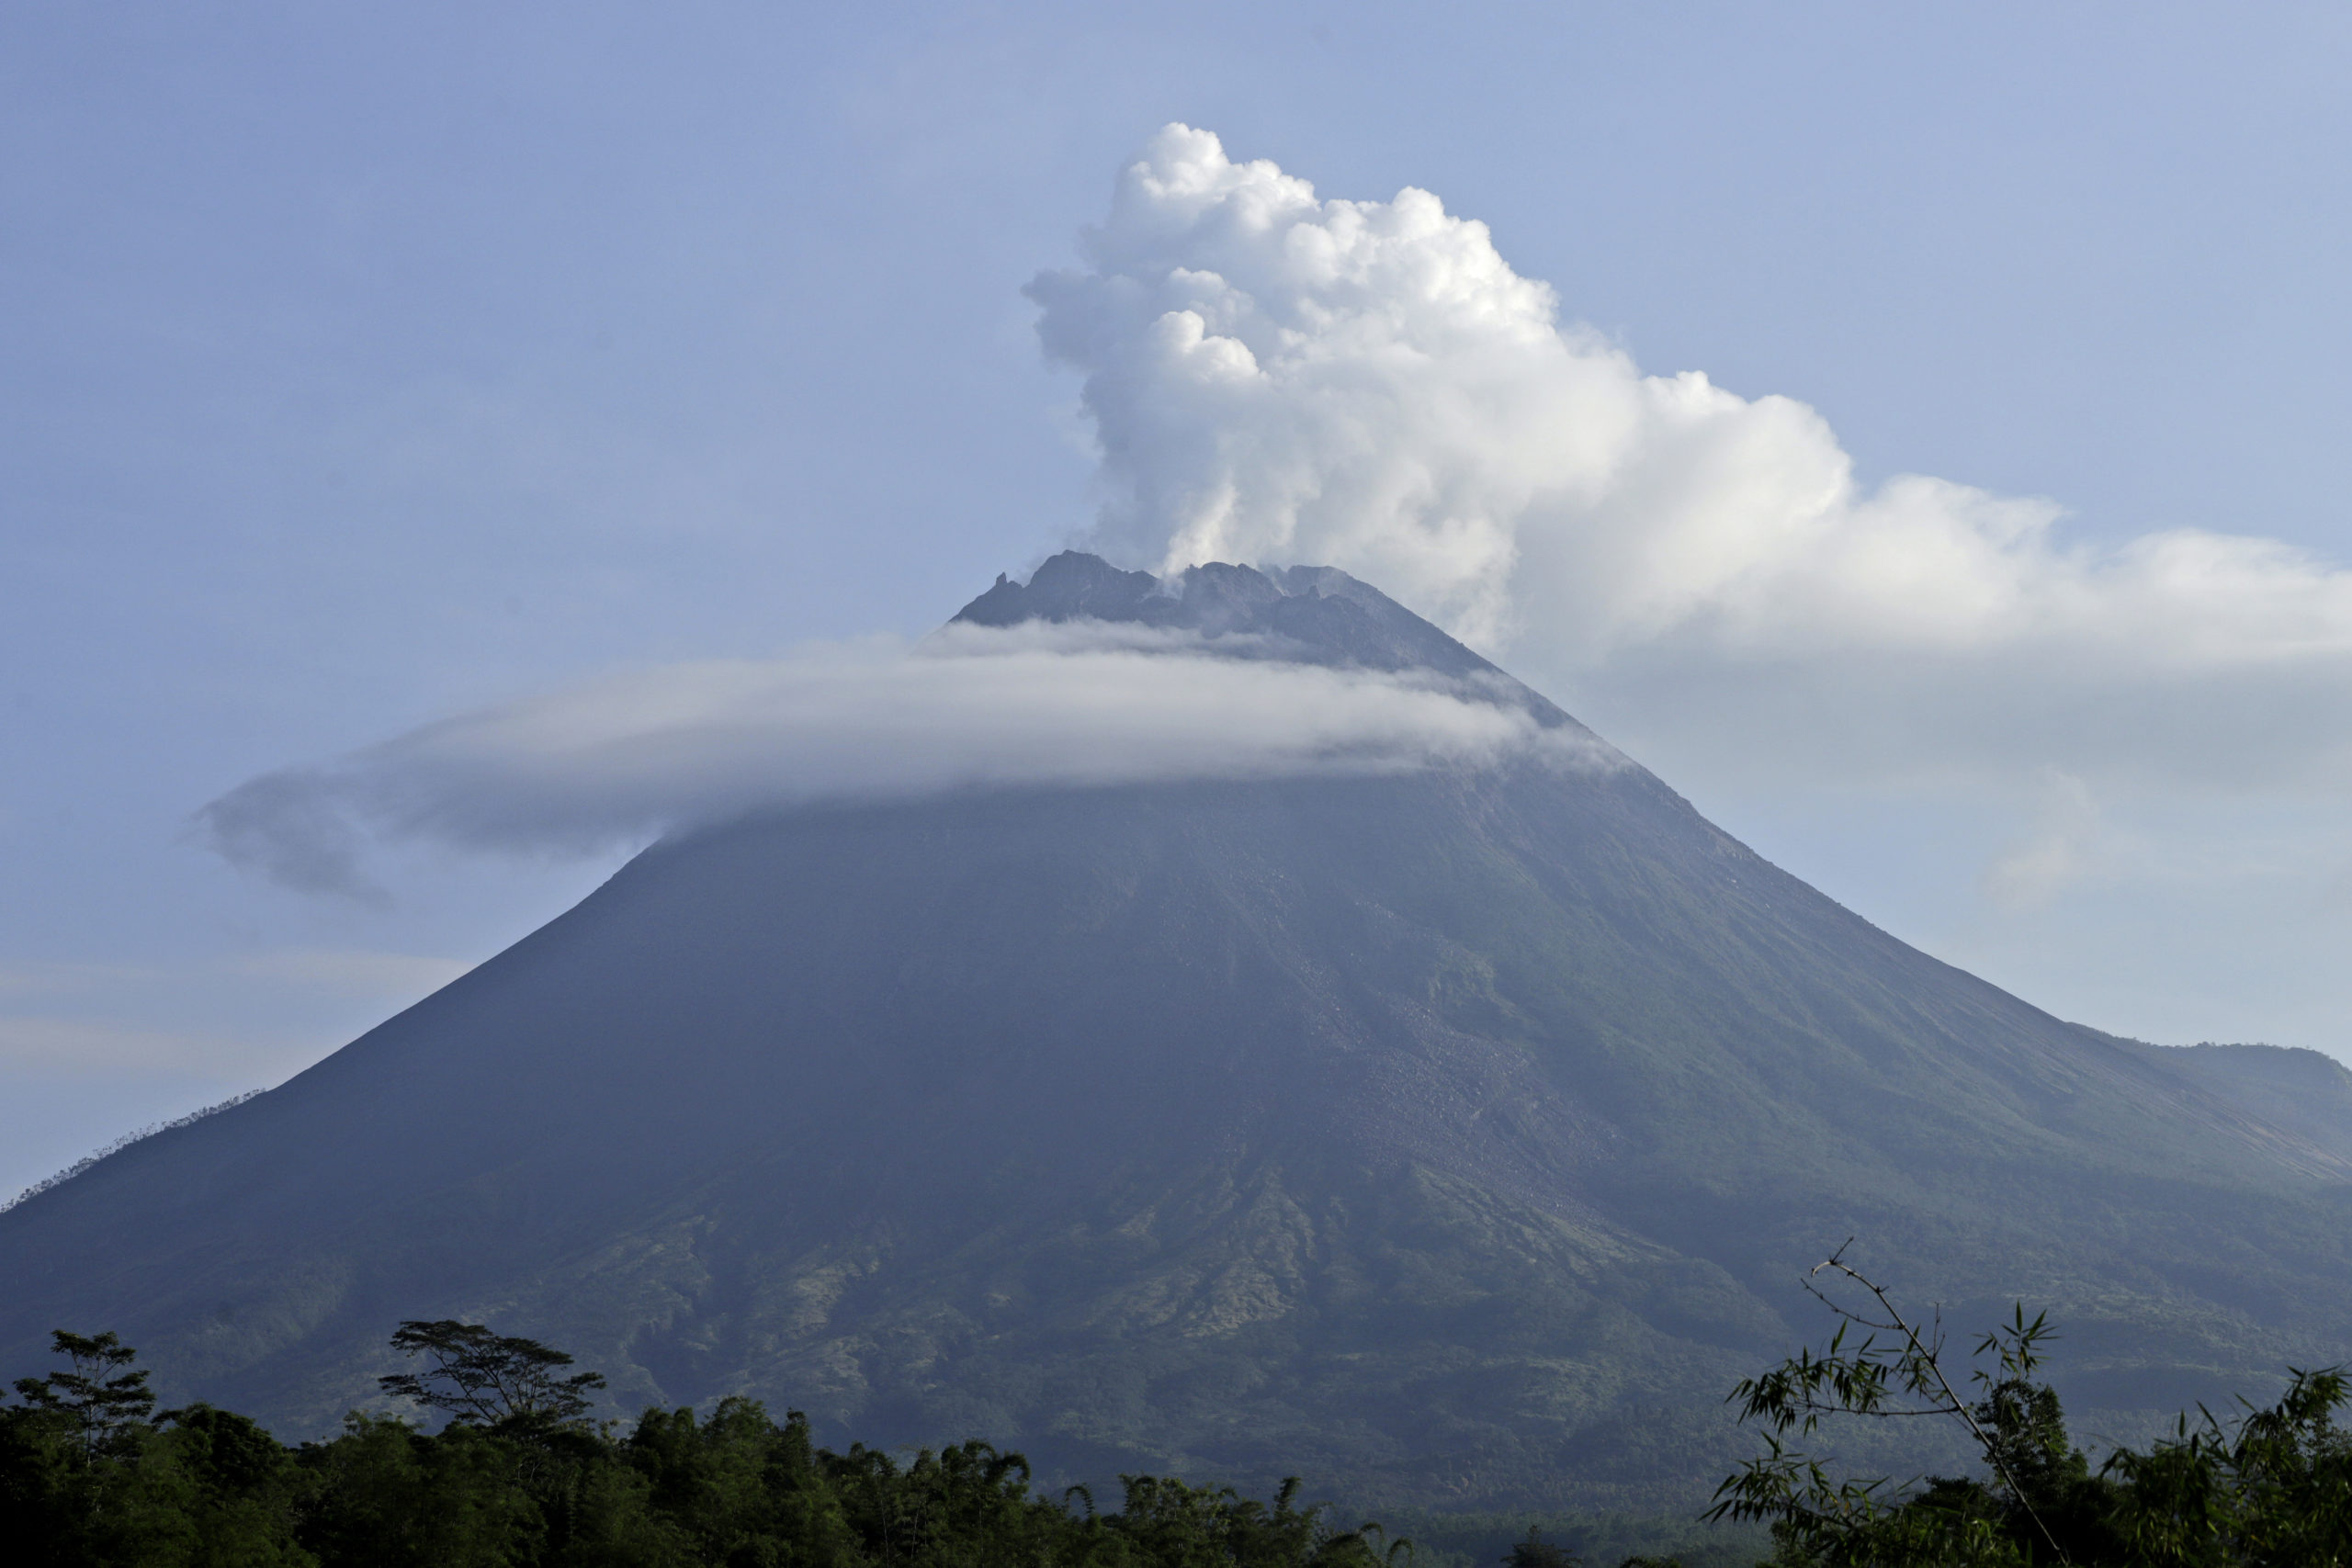  Indonesia  s Merapi Volcano  Spews Hot Clouds 500 Evacuate